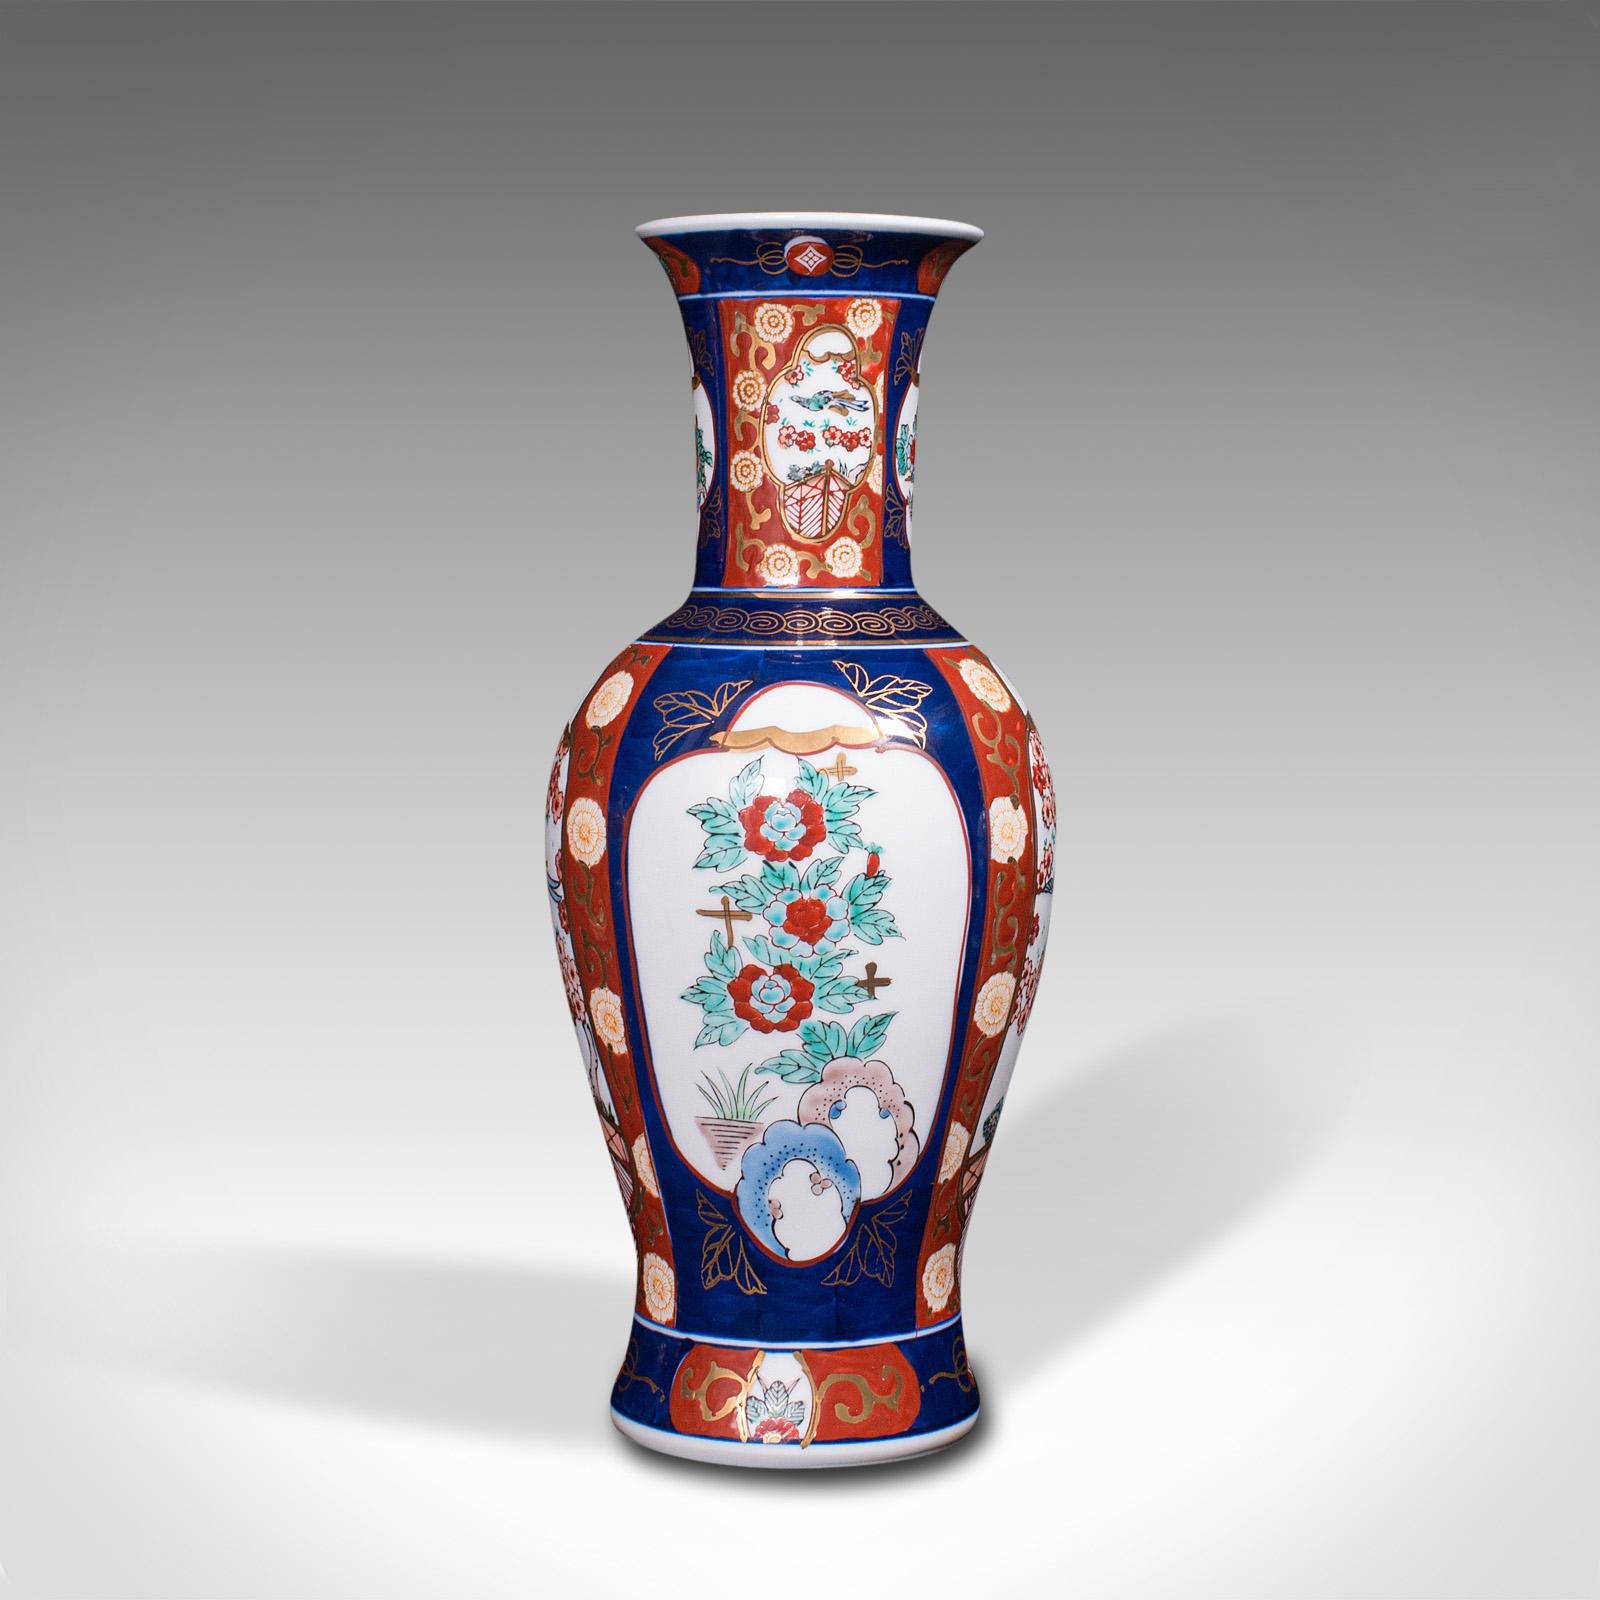 20th Century Pair of Vintage Flower Vases, Chinese, Display Urn, Imari Revival, Late 20th.C